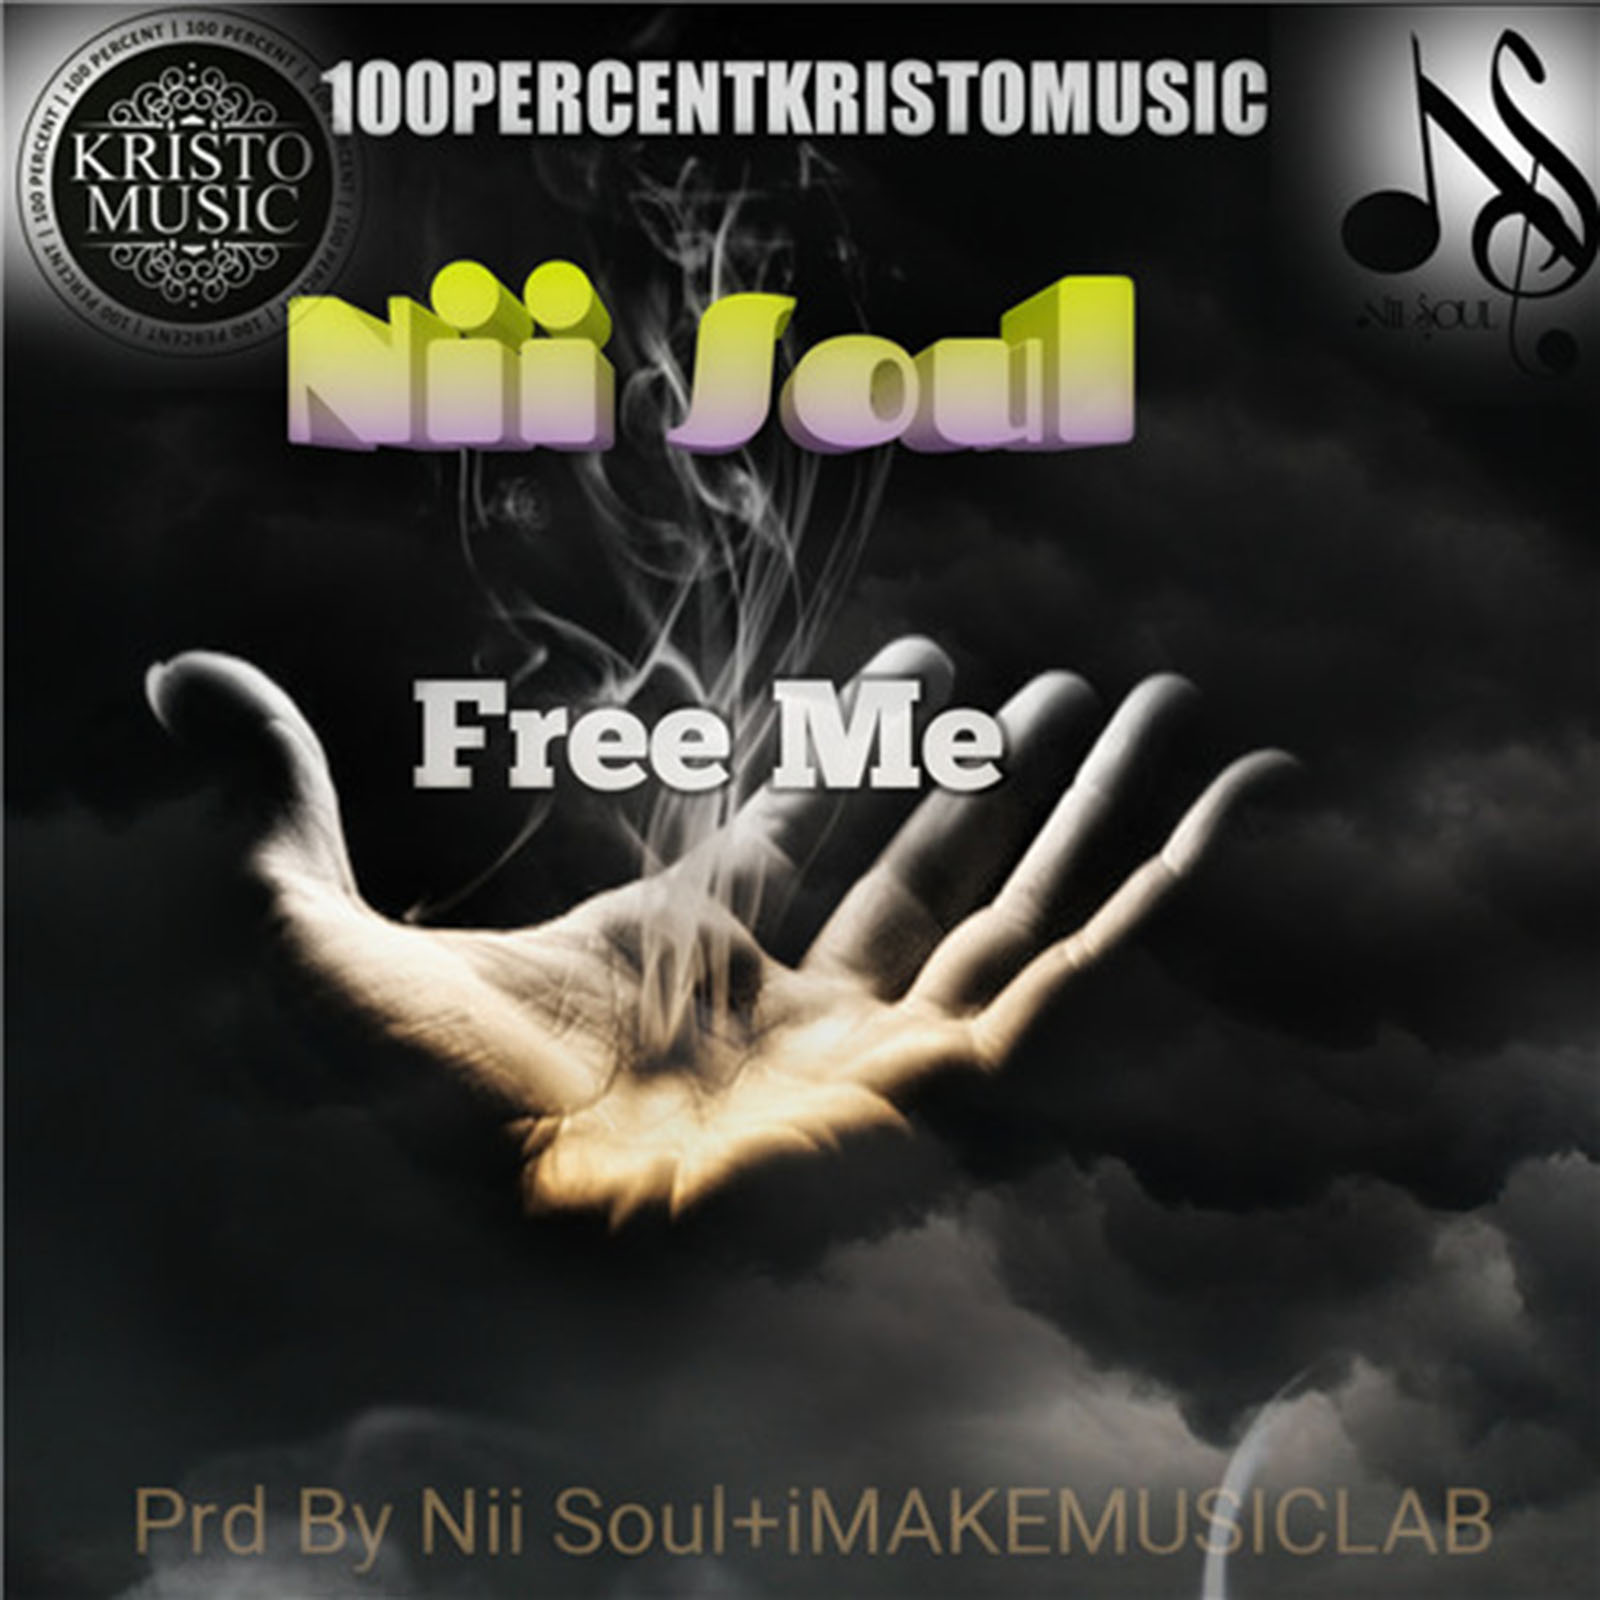 Free Me by Nii Soul